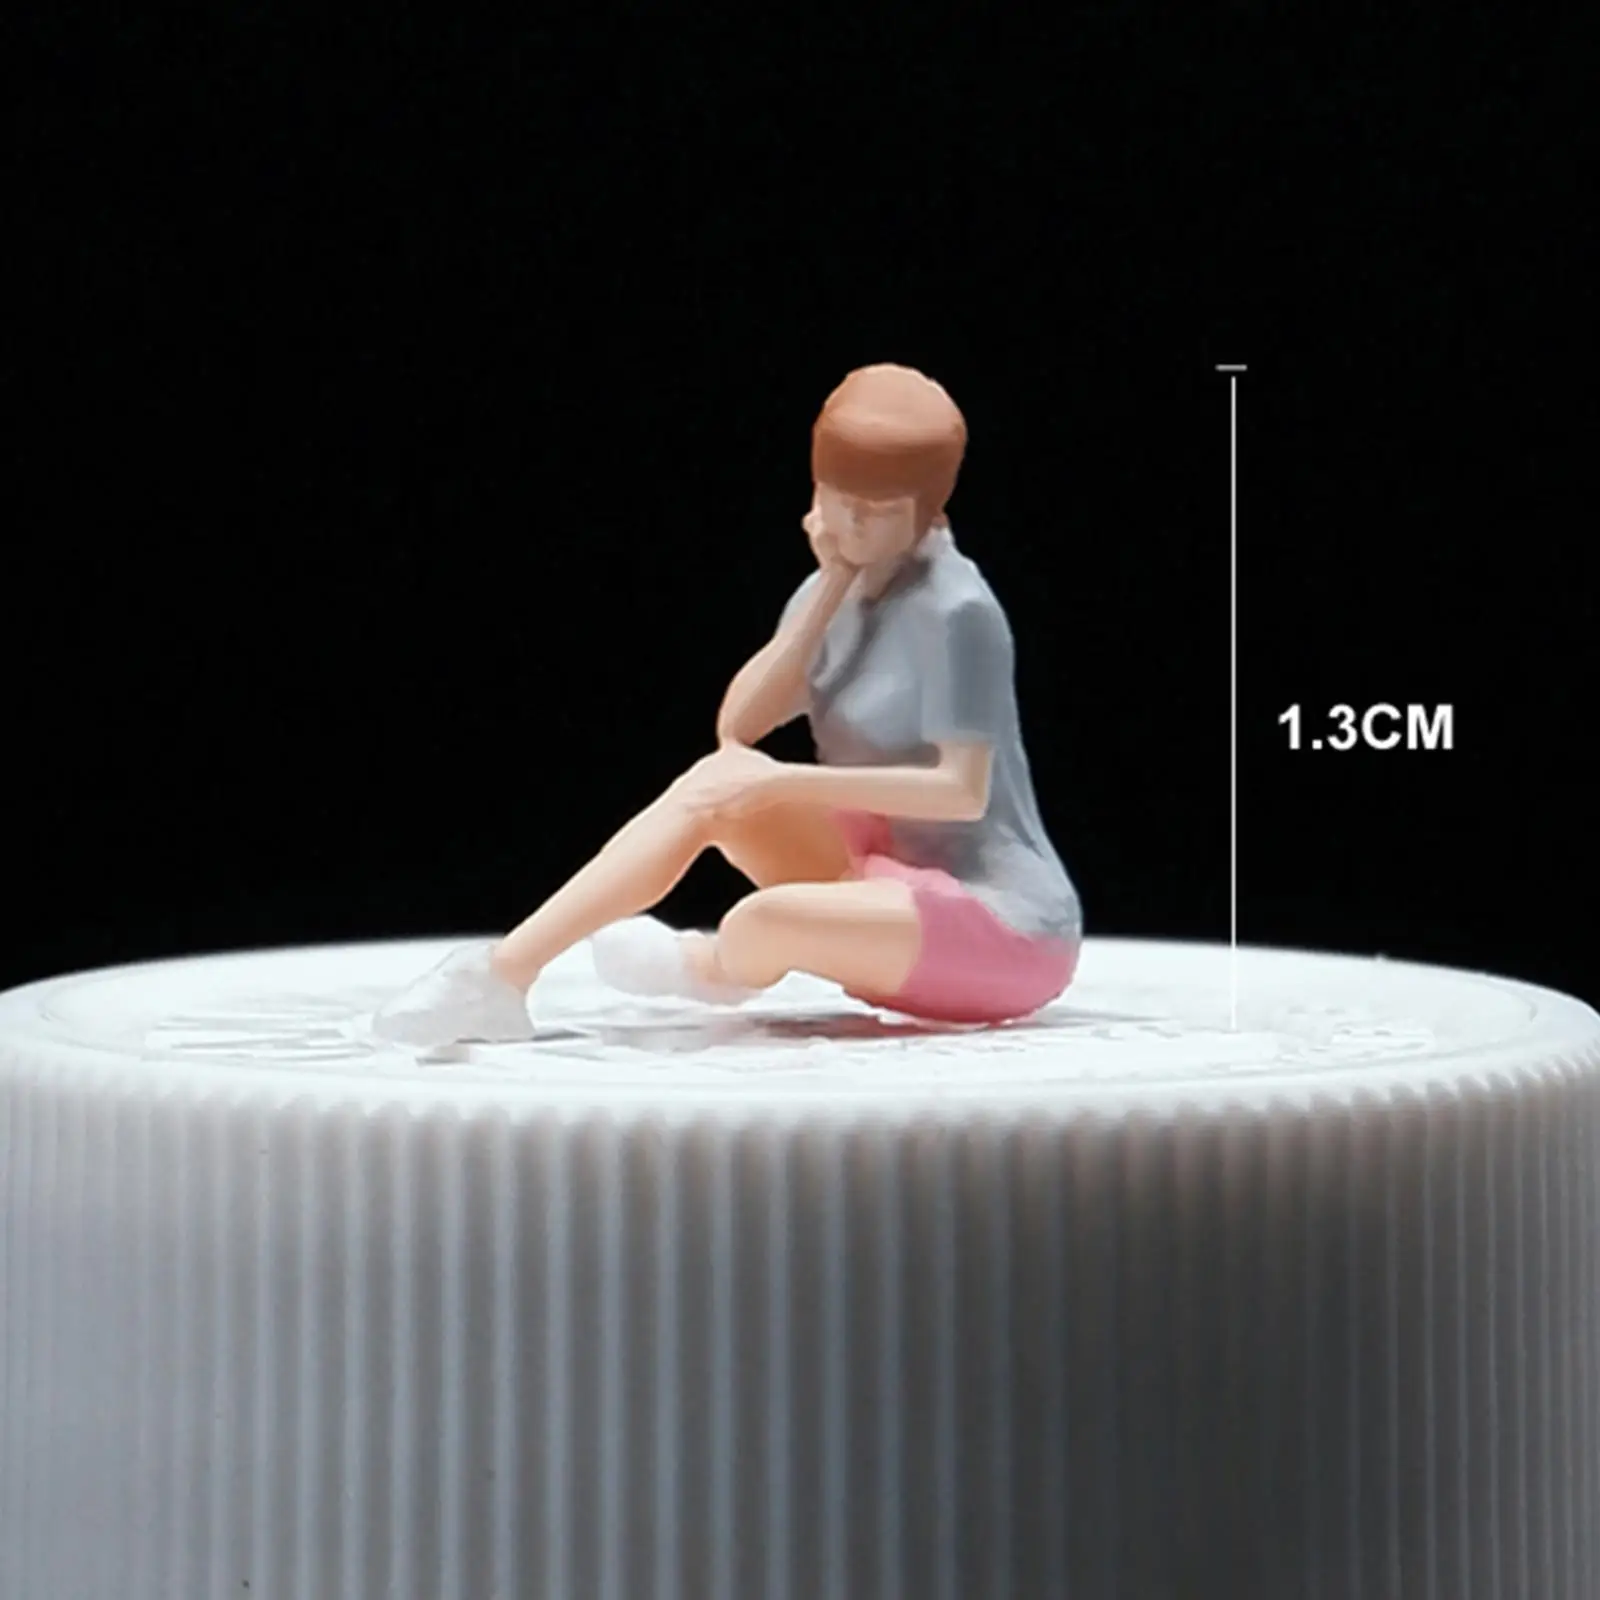 Miniature figure/64 Scale for Layout Diorama Scenery Architecture Model